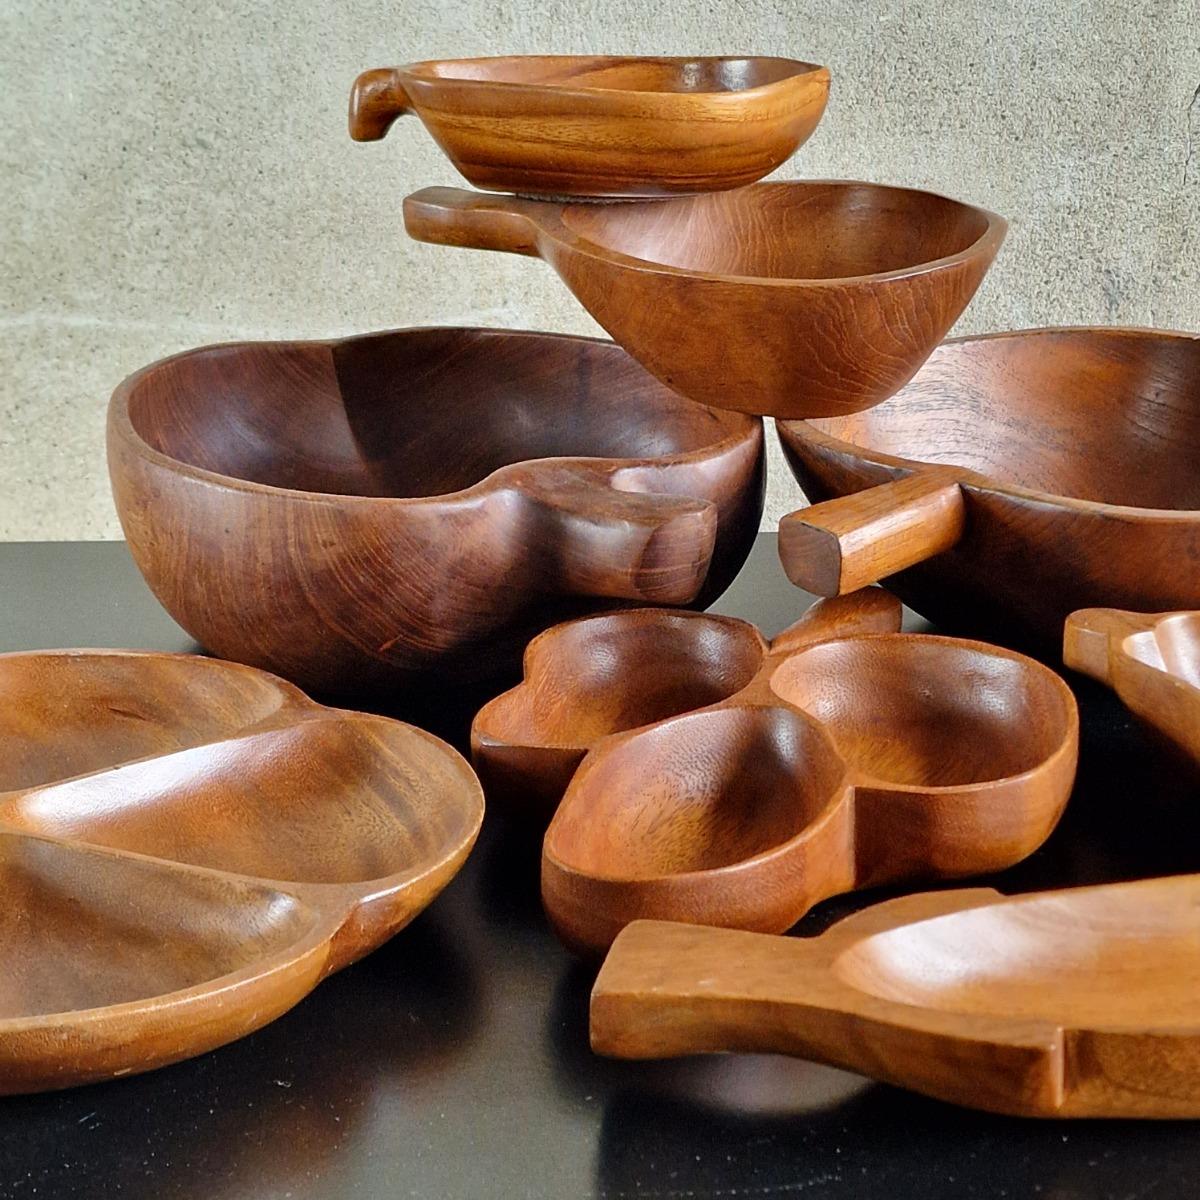 8 fruit-shaped wooden trays